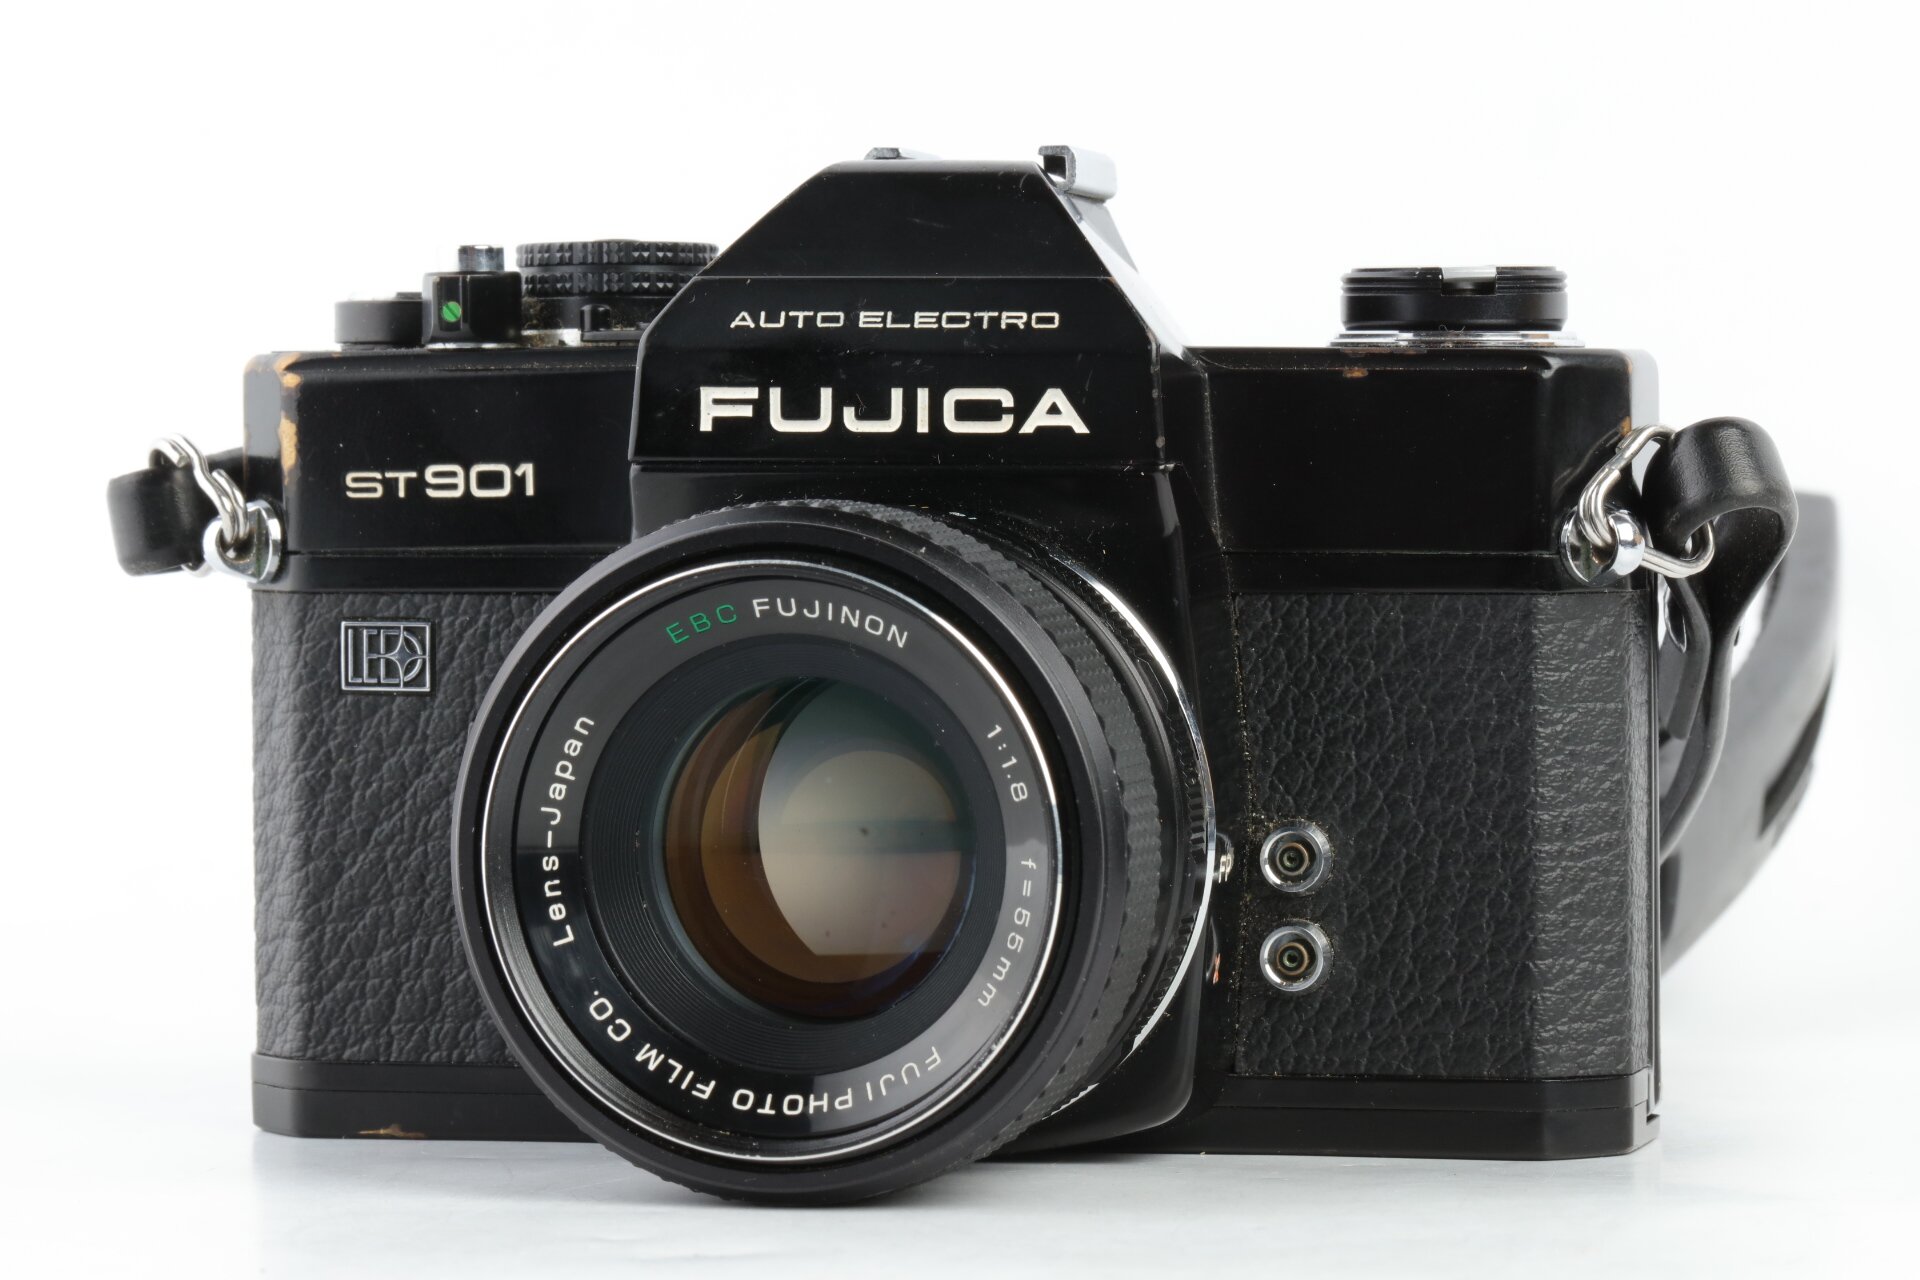 Fujica ST901 Auto Elektronik Fuji EBC Fujinon 1,8/55mm